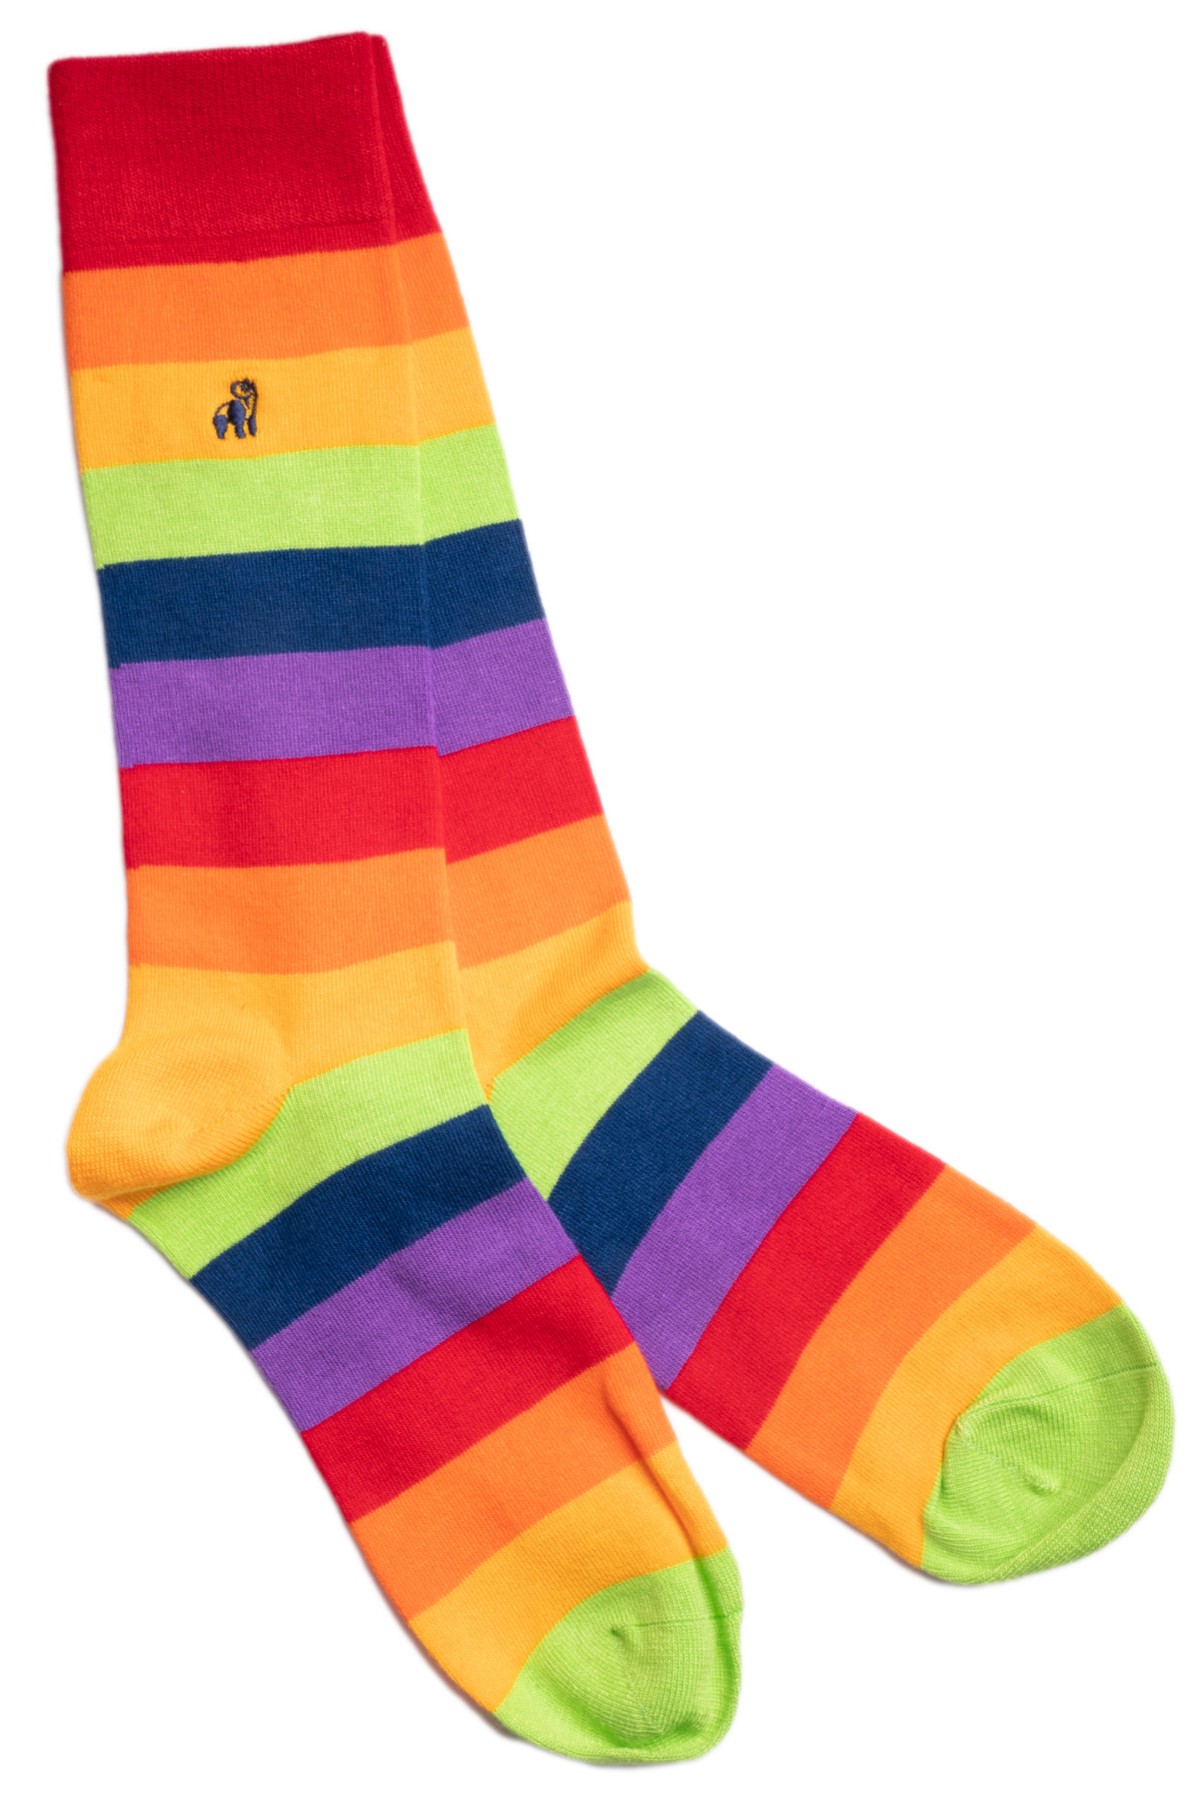 Narrow Stripe Sock Bundle - Four Pairs